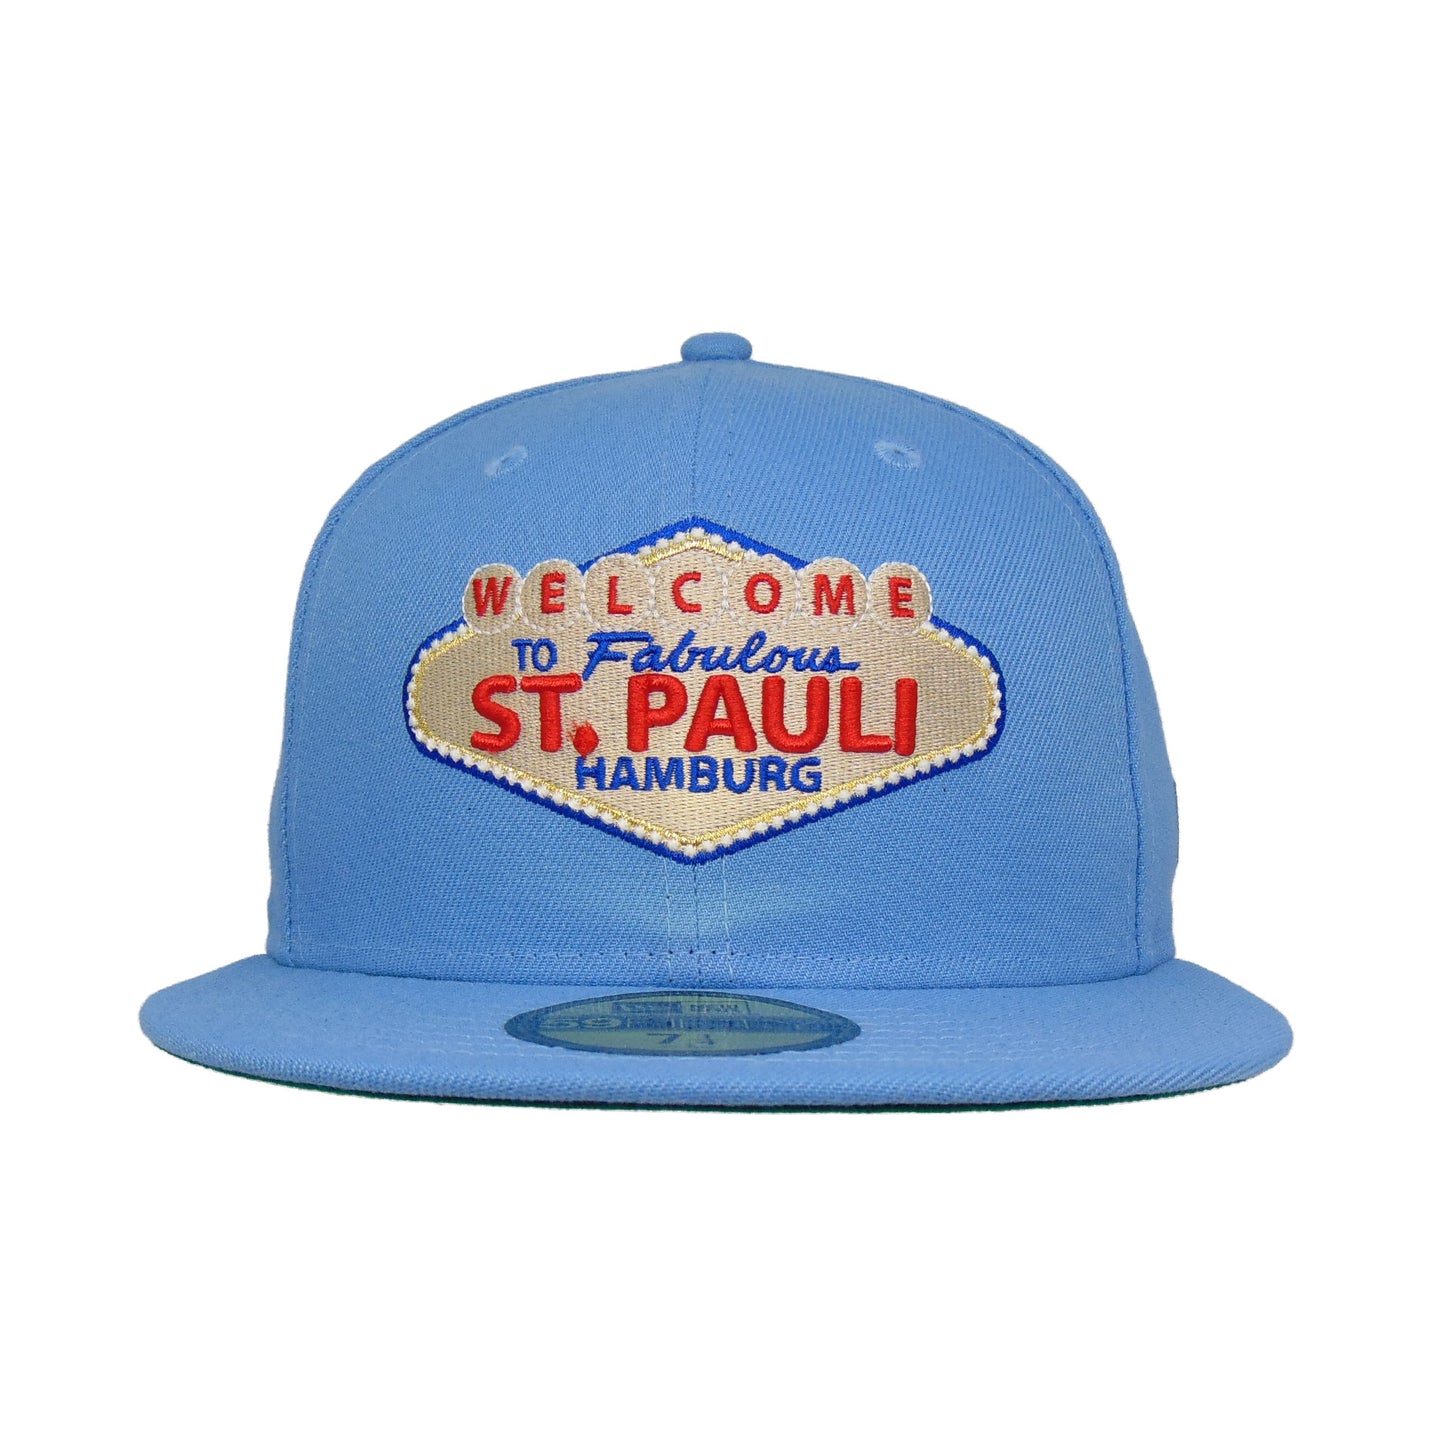 St. Pauli JF Exclusive New Era 59Fifty Cap Welcome Sky